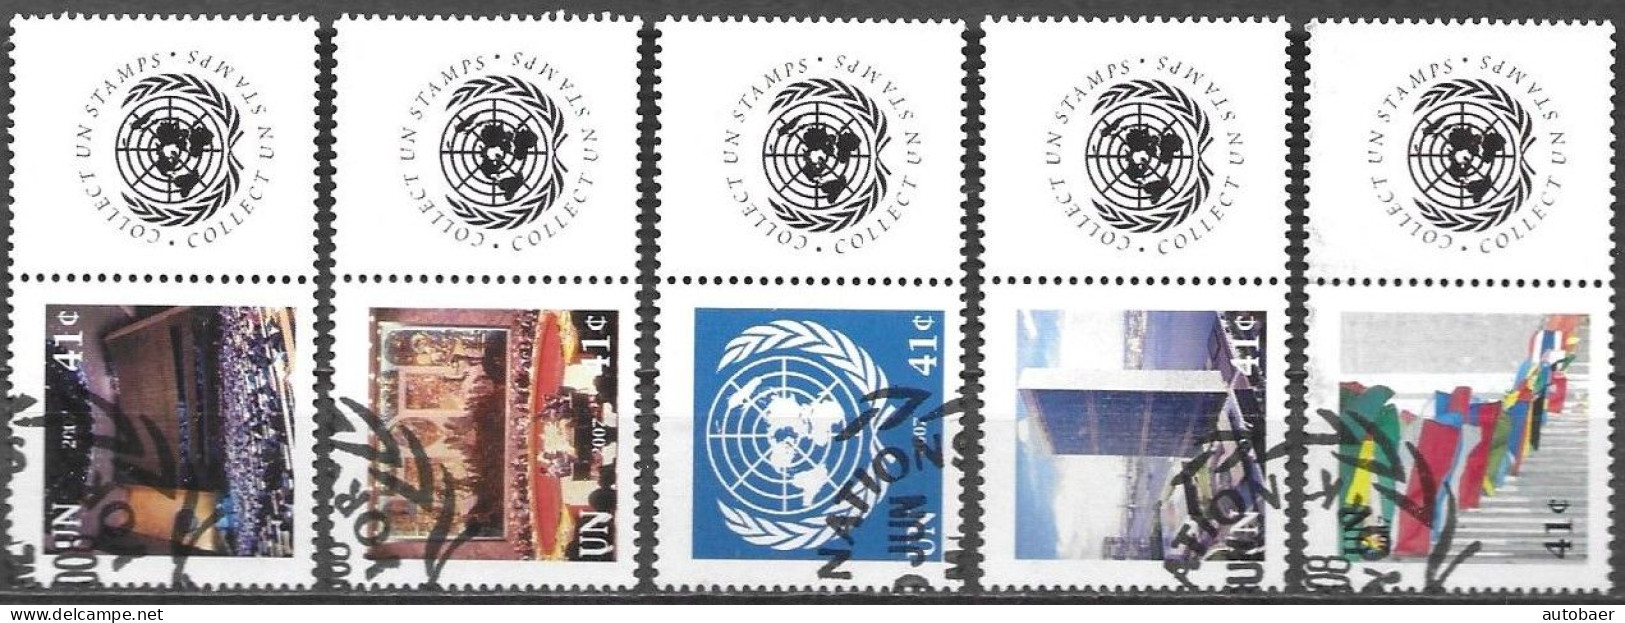 United Nations UNO UN Vereinte Nationen New York 2007 Greetings Mi. No. 1057-61 Label Used Cancelled Oblitéré - Usati